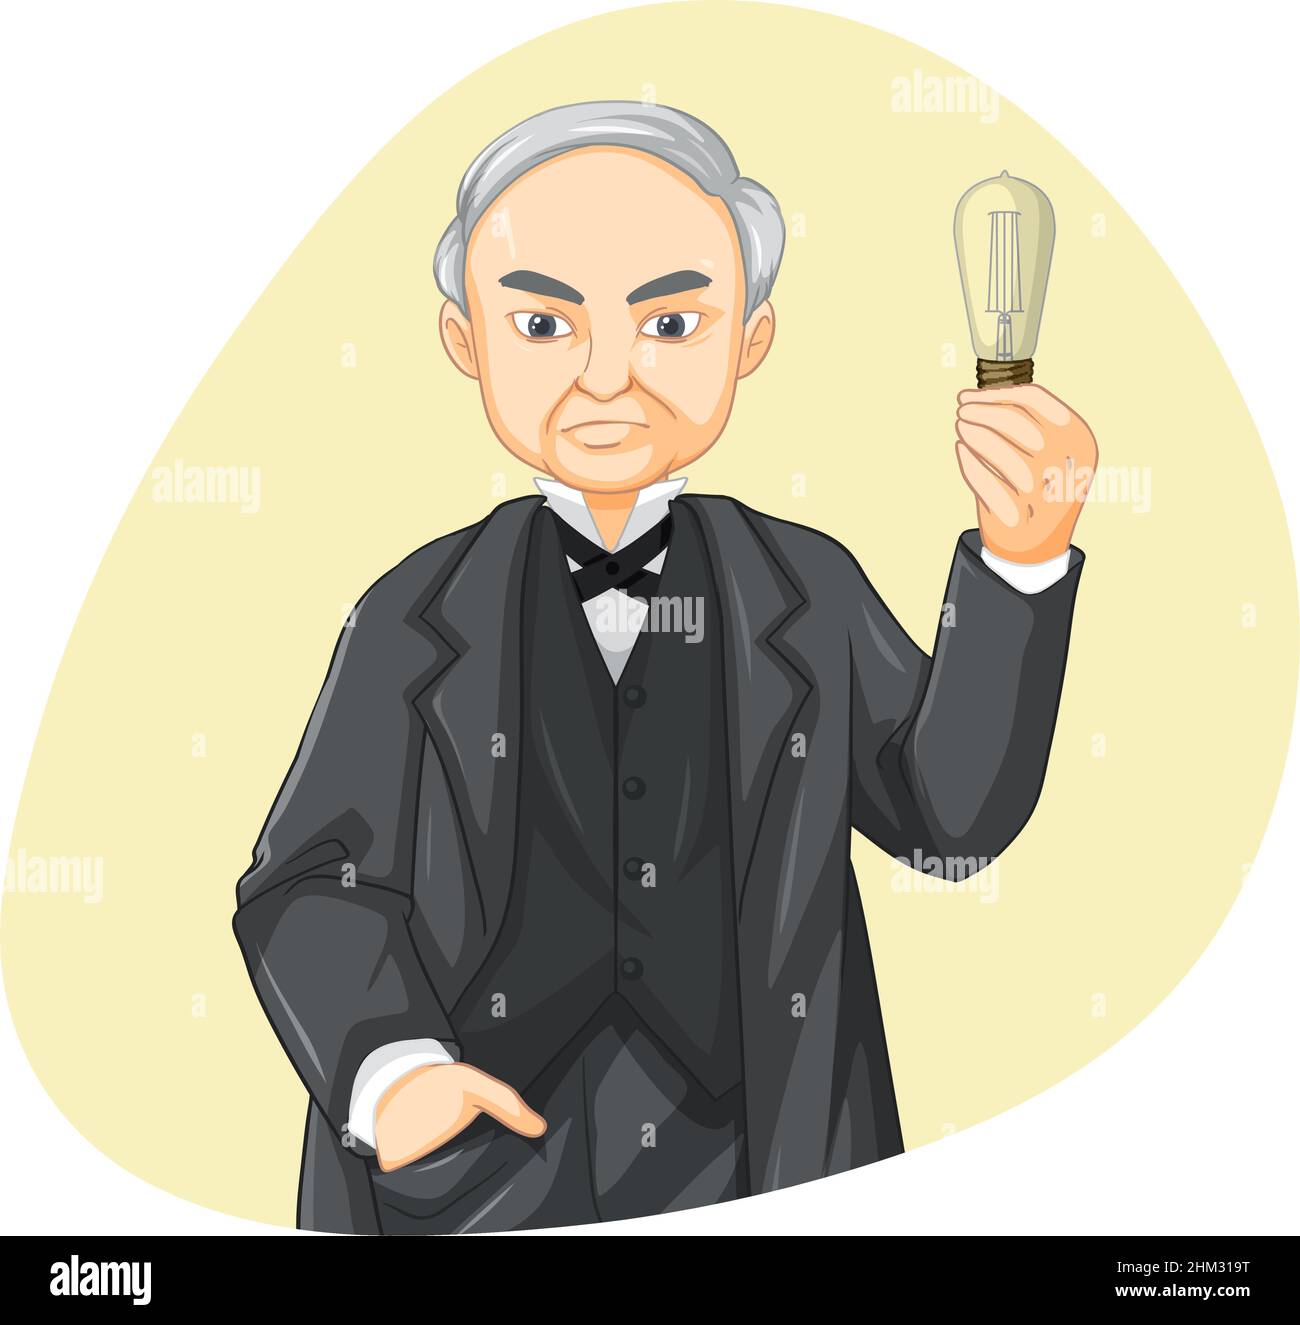 Thomas Edison holding light bulb illustration Stock Vector